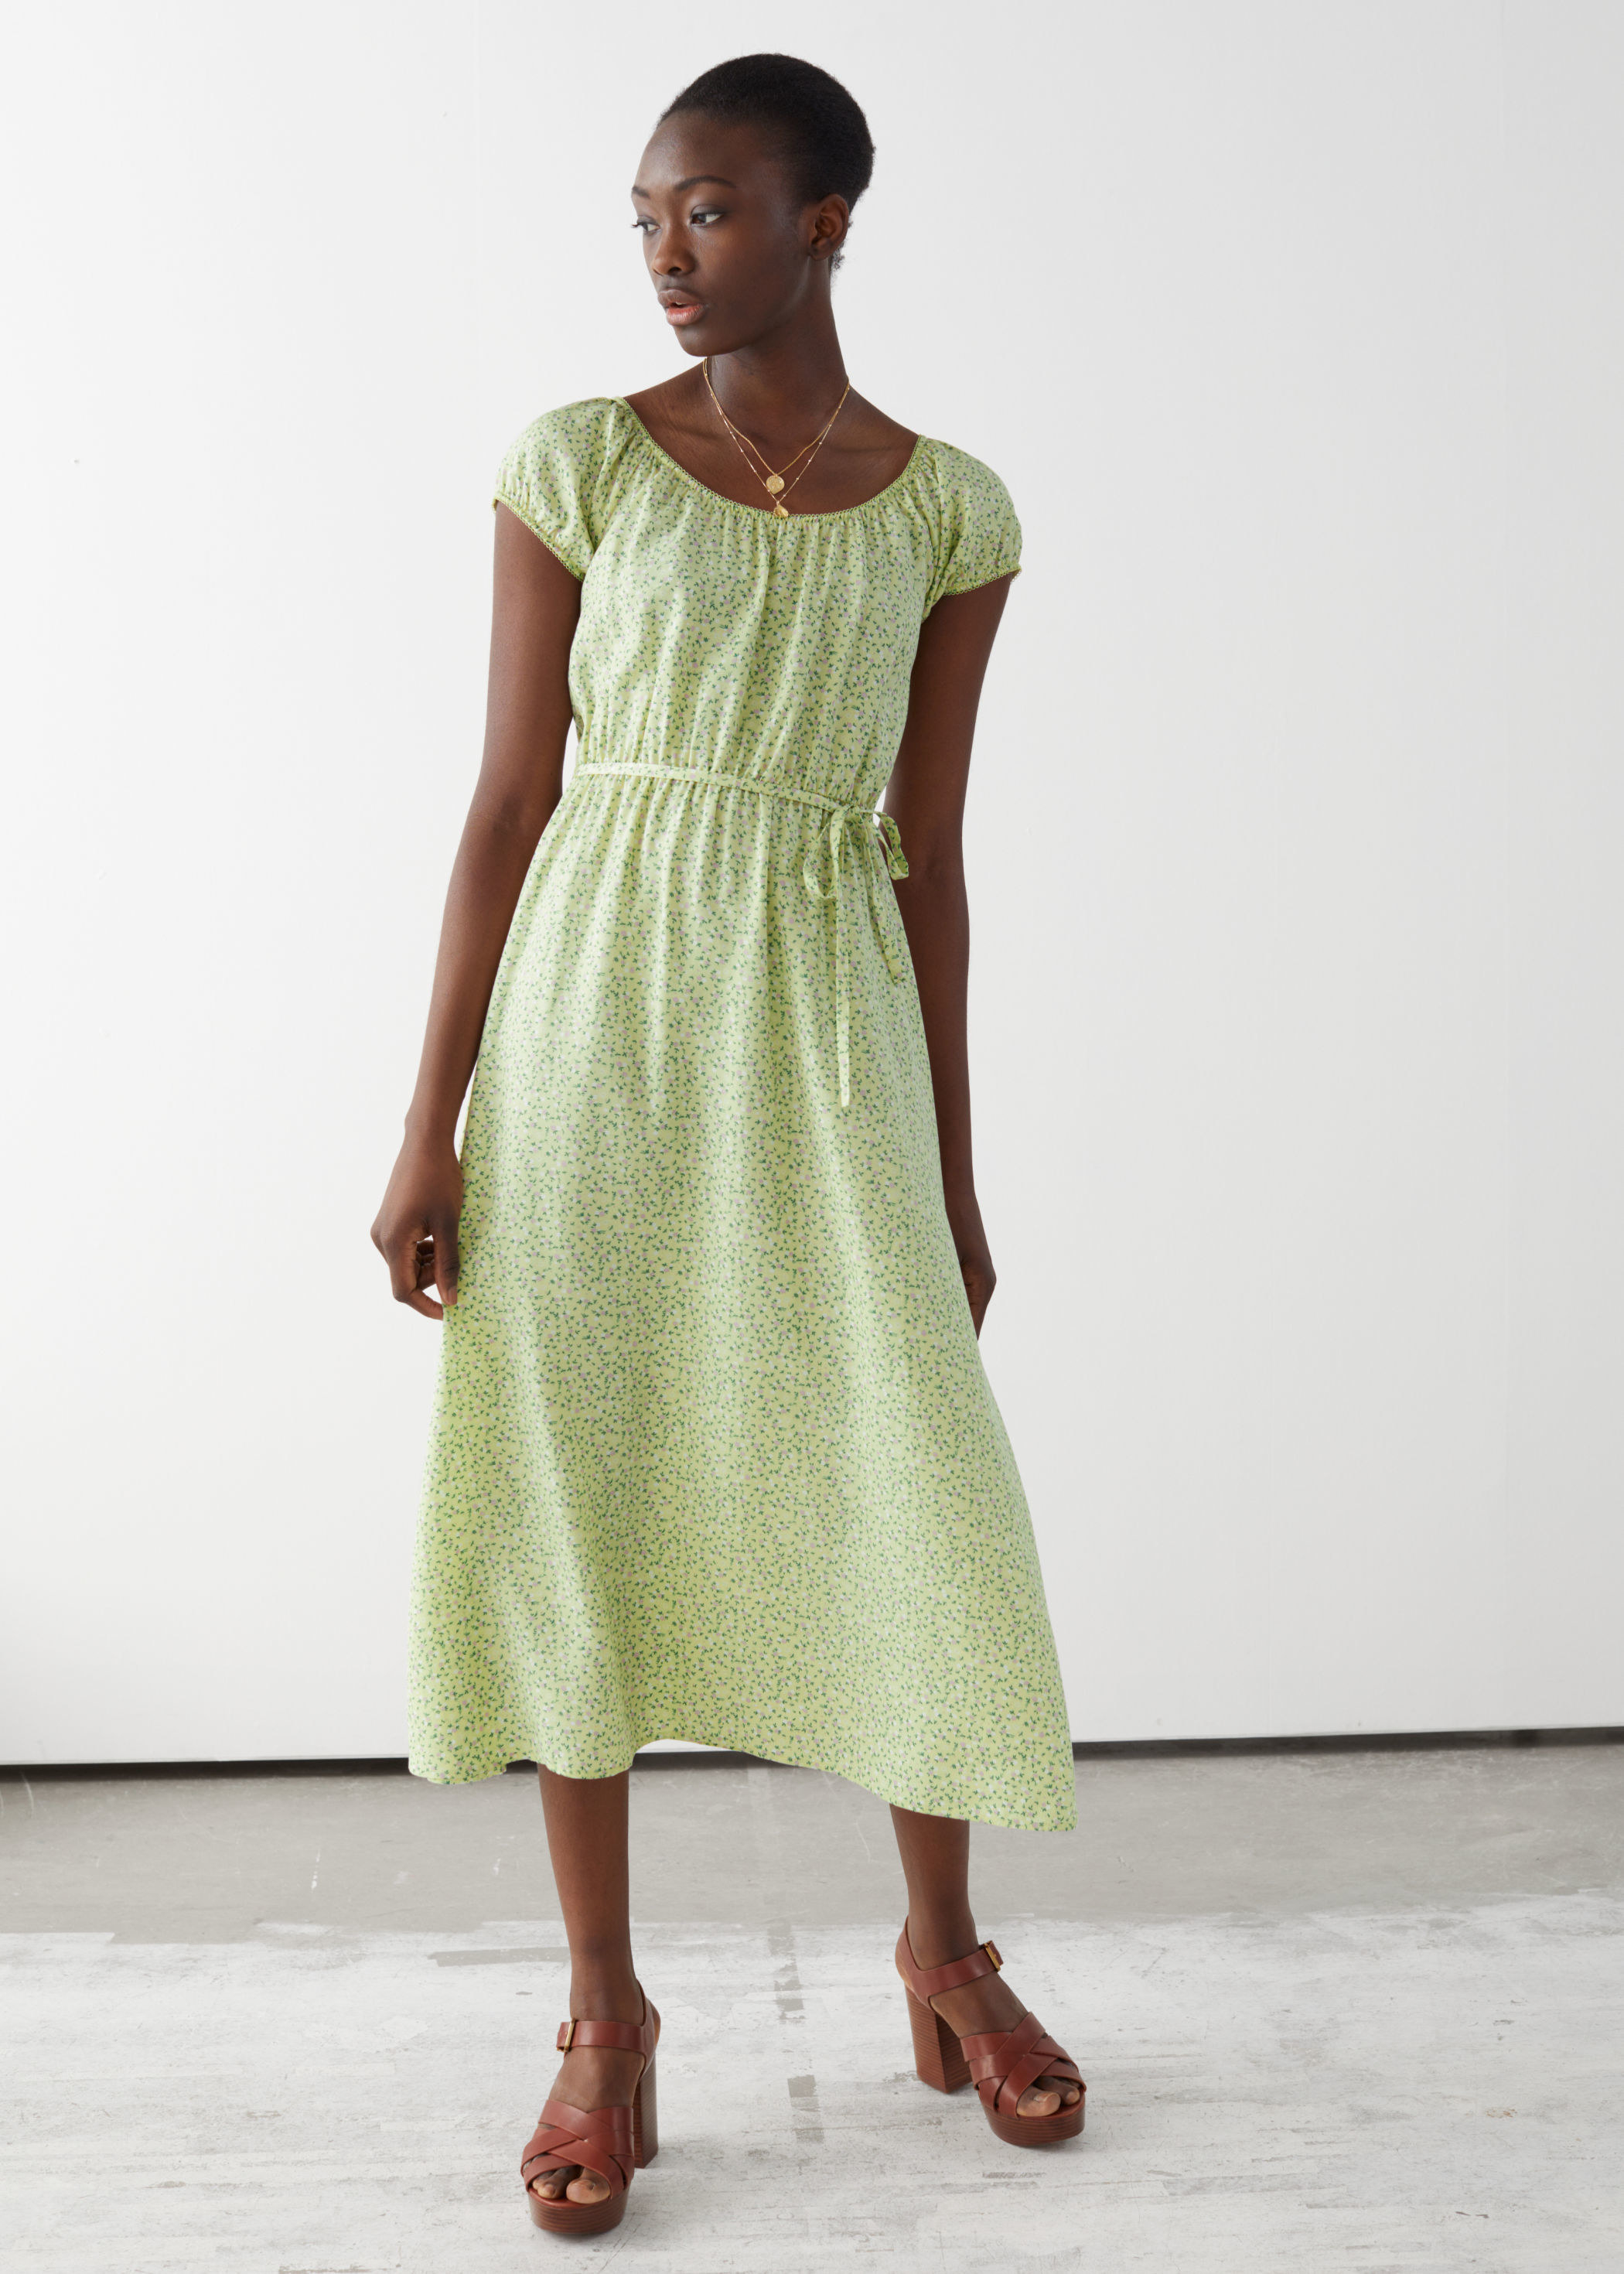 model wearing green floral midi dress